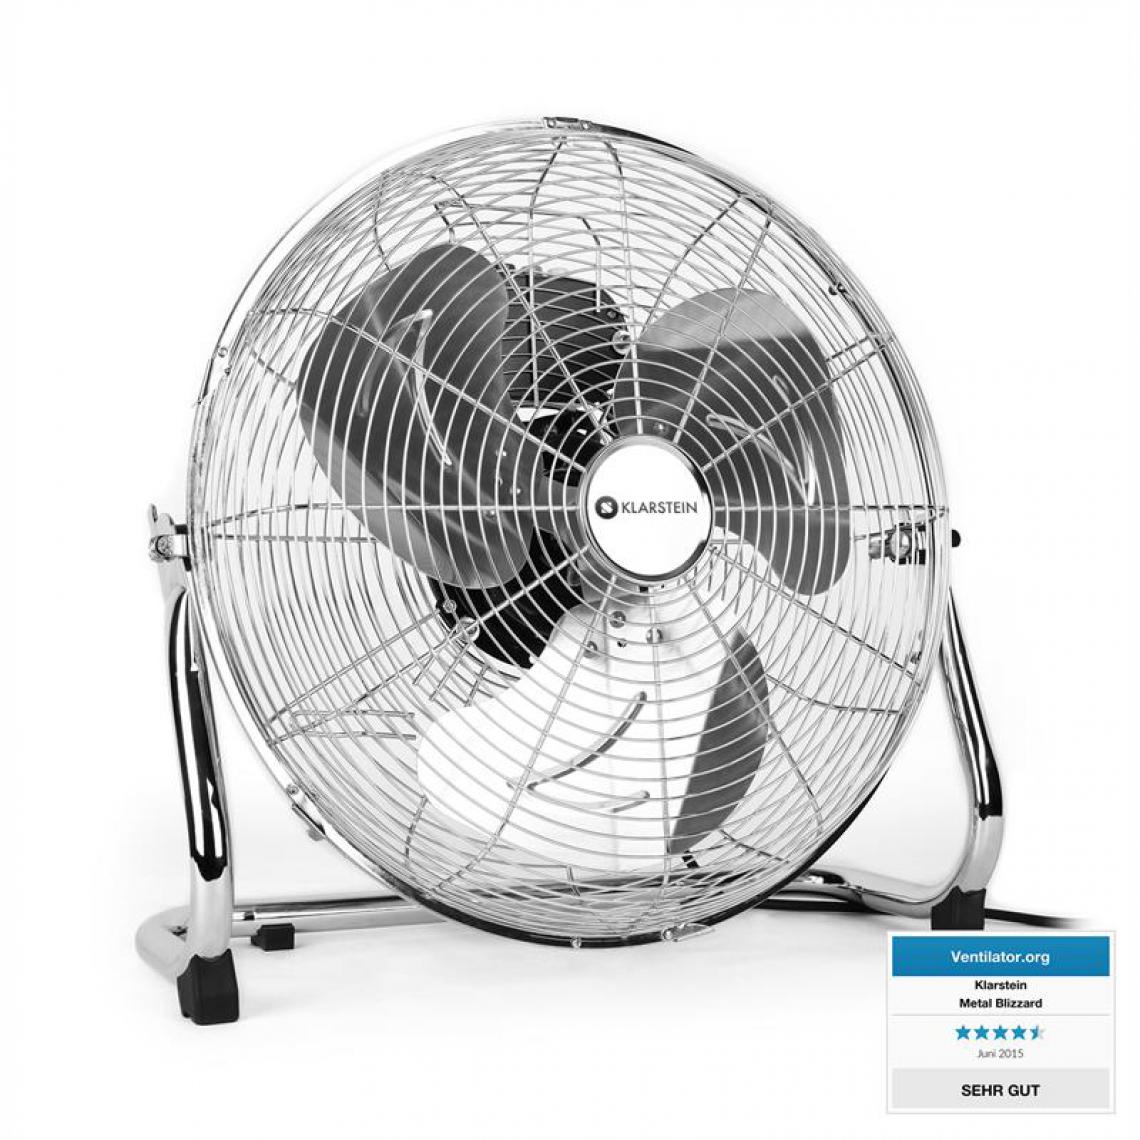 Klarstein - Klarstein Metal Blizzard ventilateur sol 16" 100W inclinable Klarstein - Ventilateur